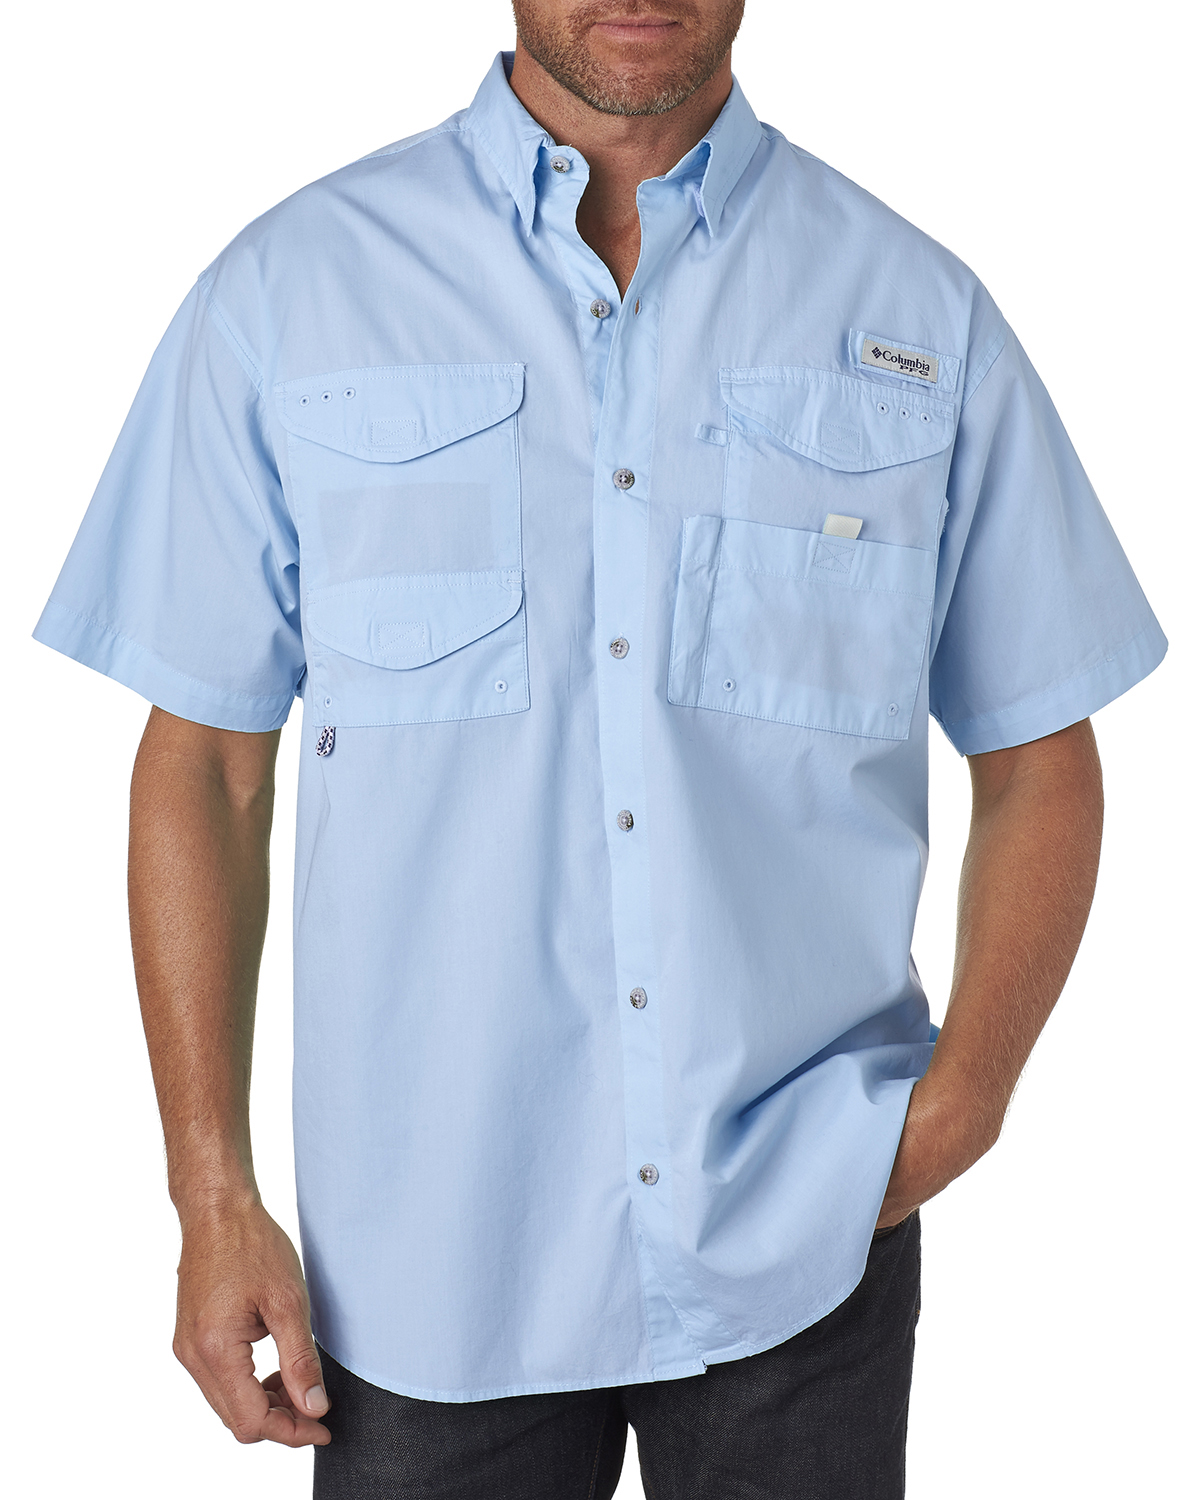 Mens Columbia Shirt Large Button Front Short Sleeve NWT Plaid Cotton Blend 